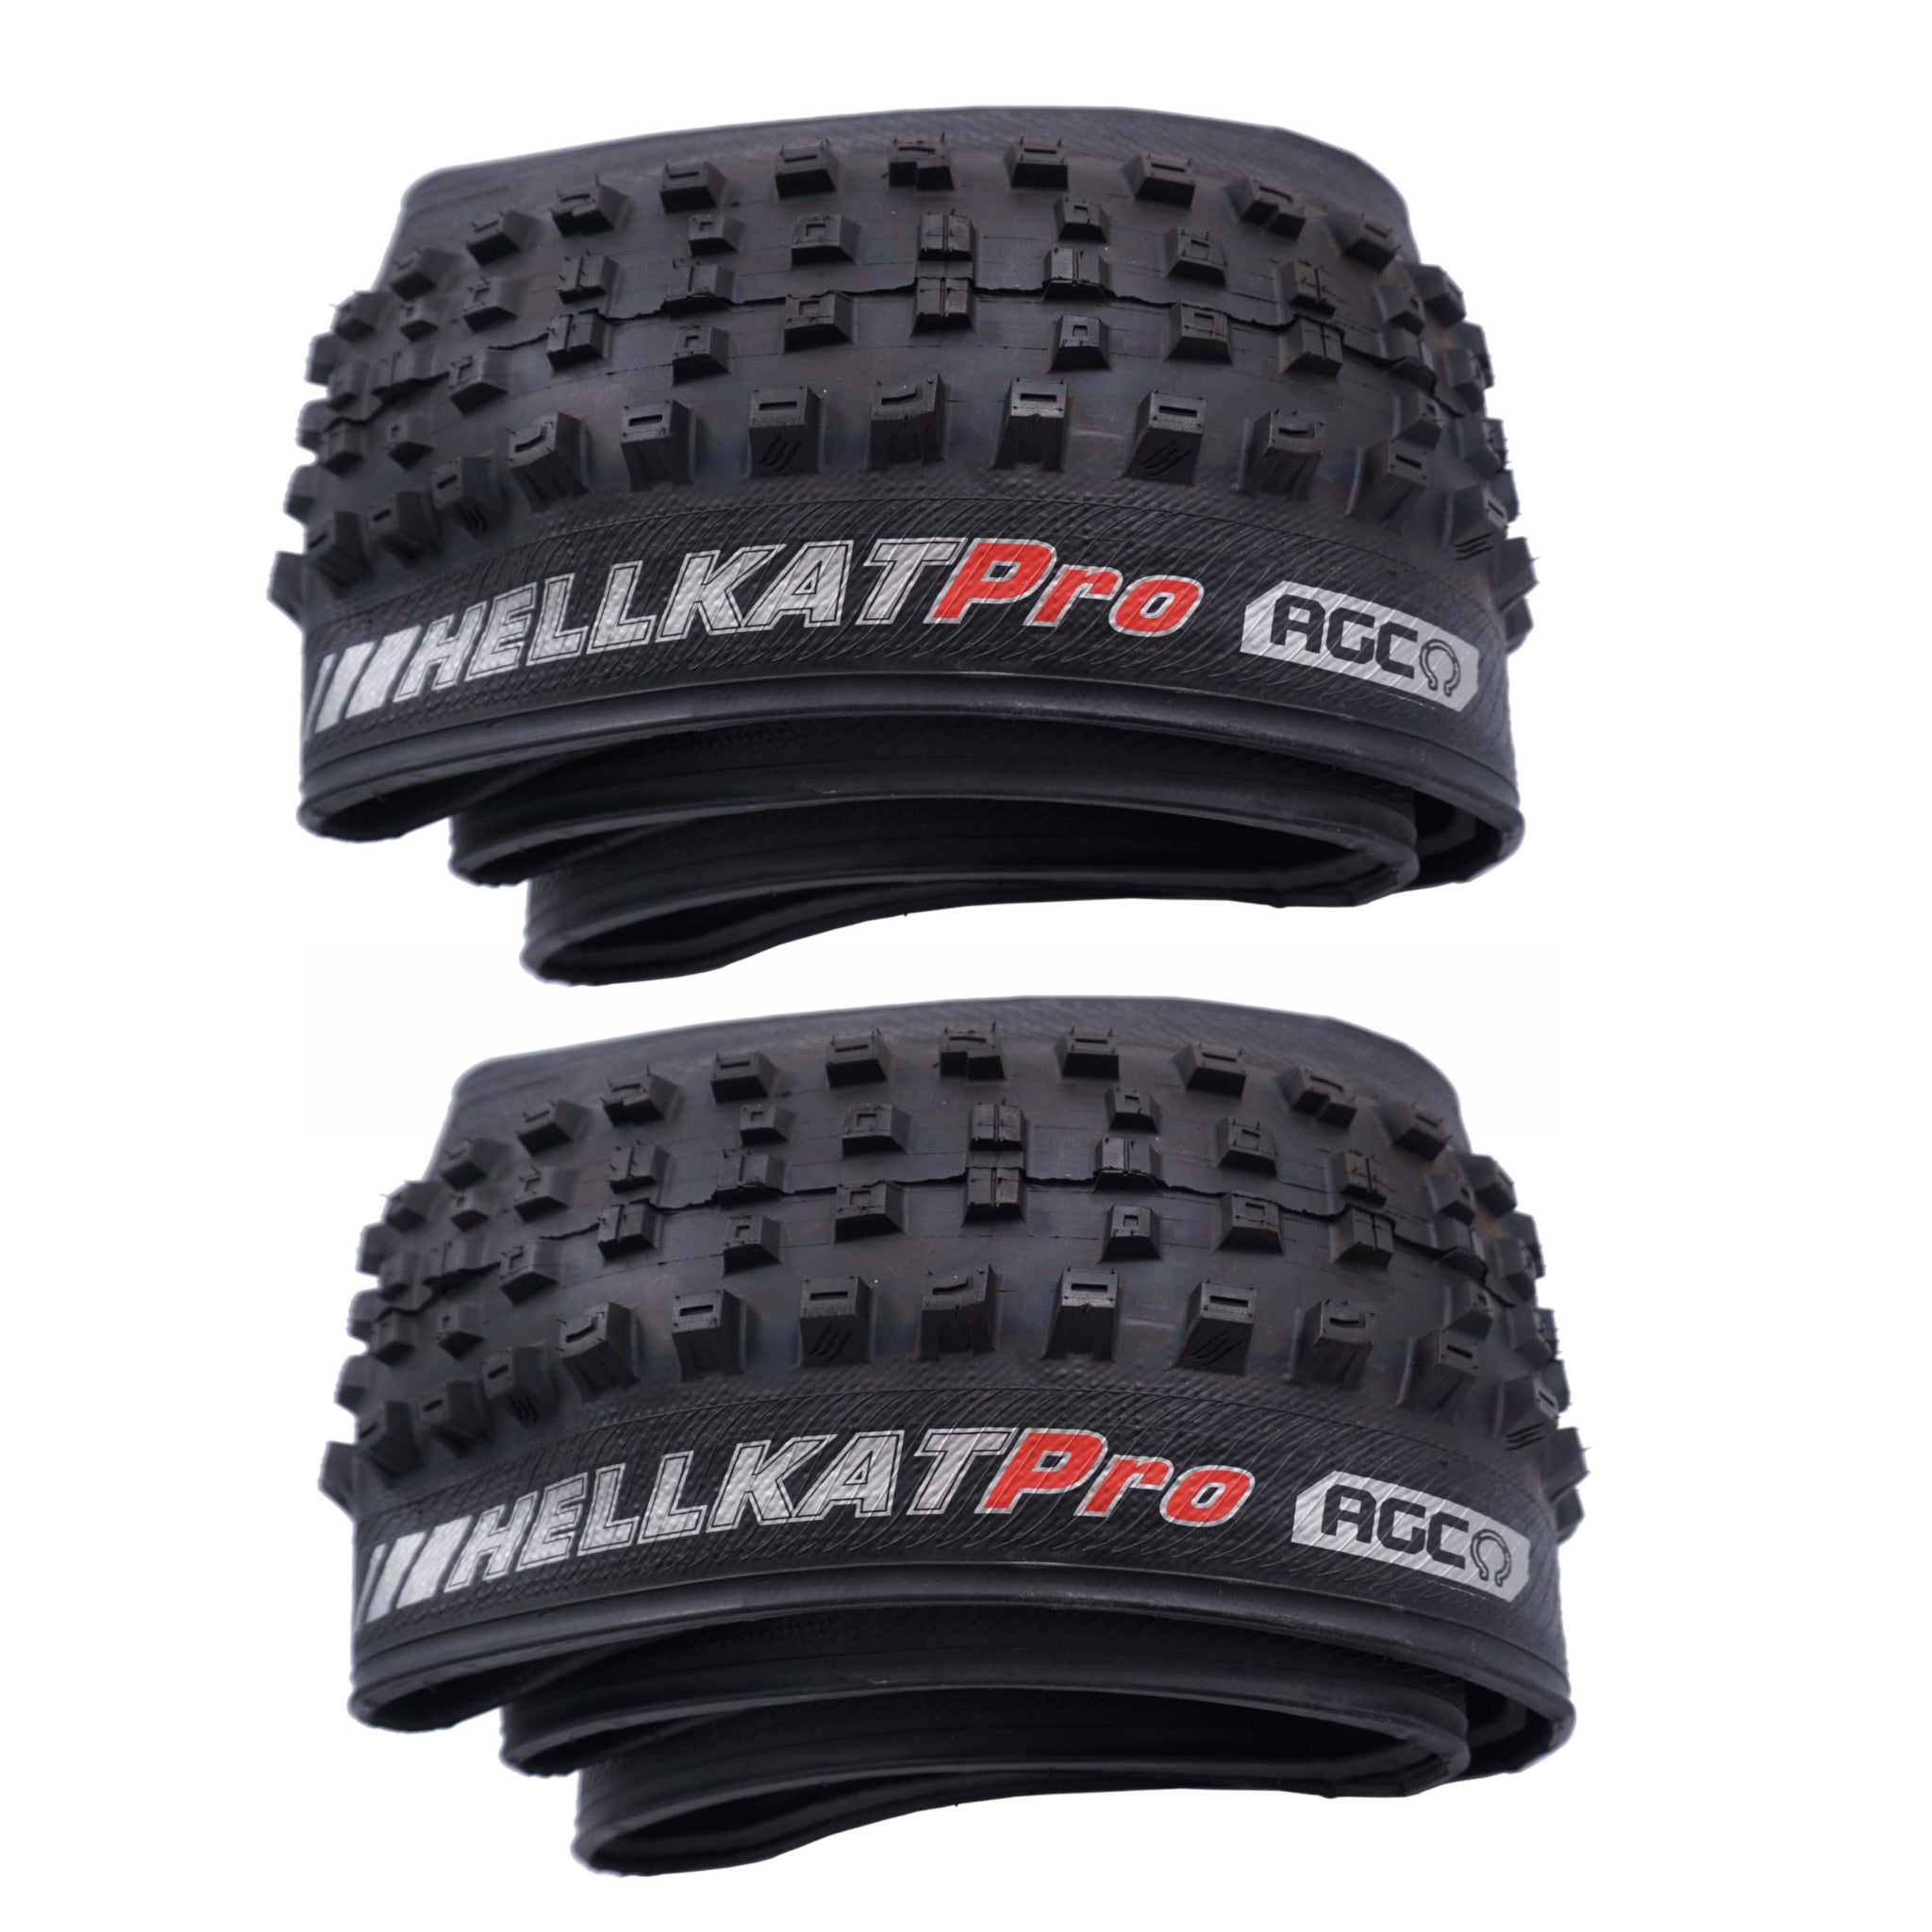 Kenda K1201 Hellkat 29x2.60 Tubeless Tire AGC TPI: 60